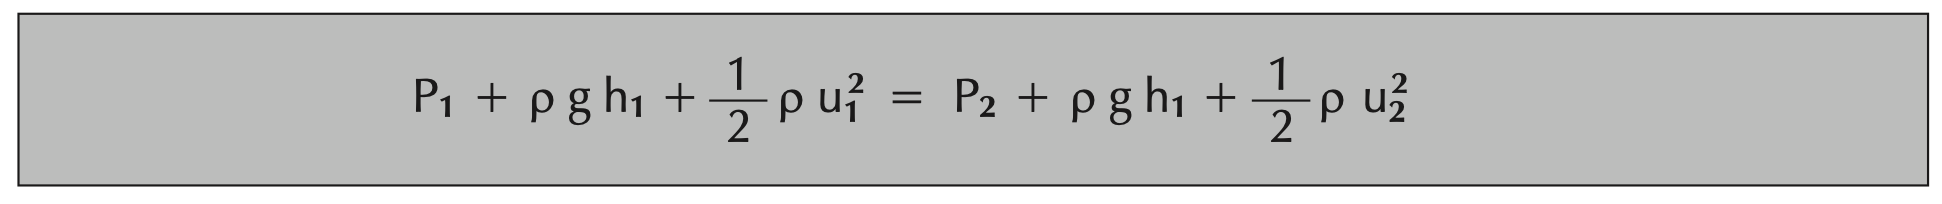 Teorema de Bernoulli aplicado en caudalímetros de vapor